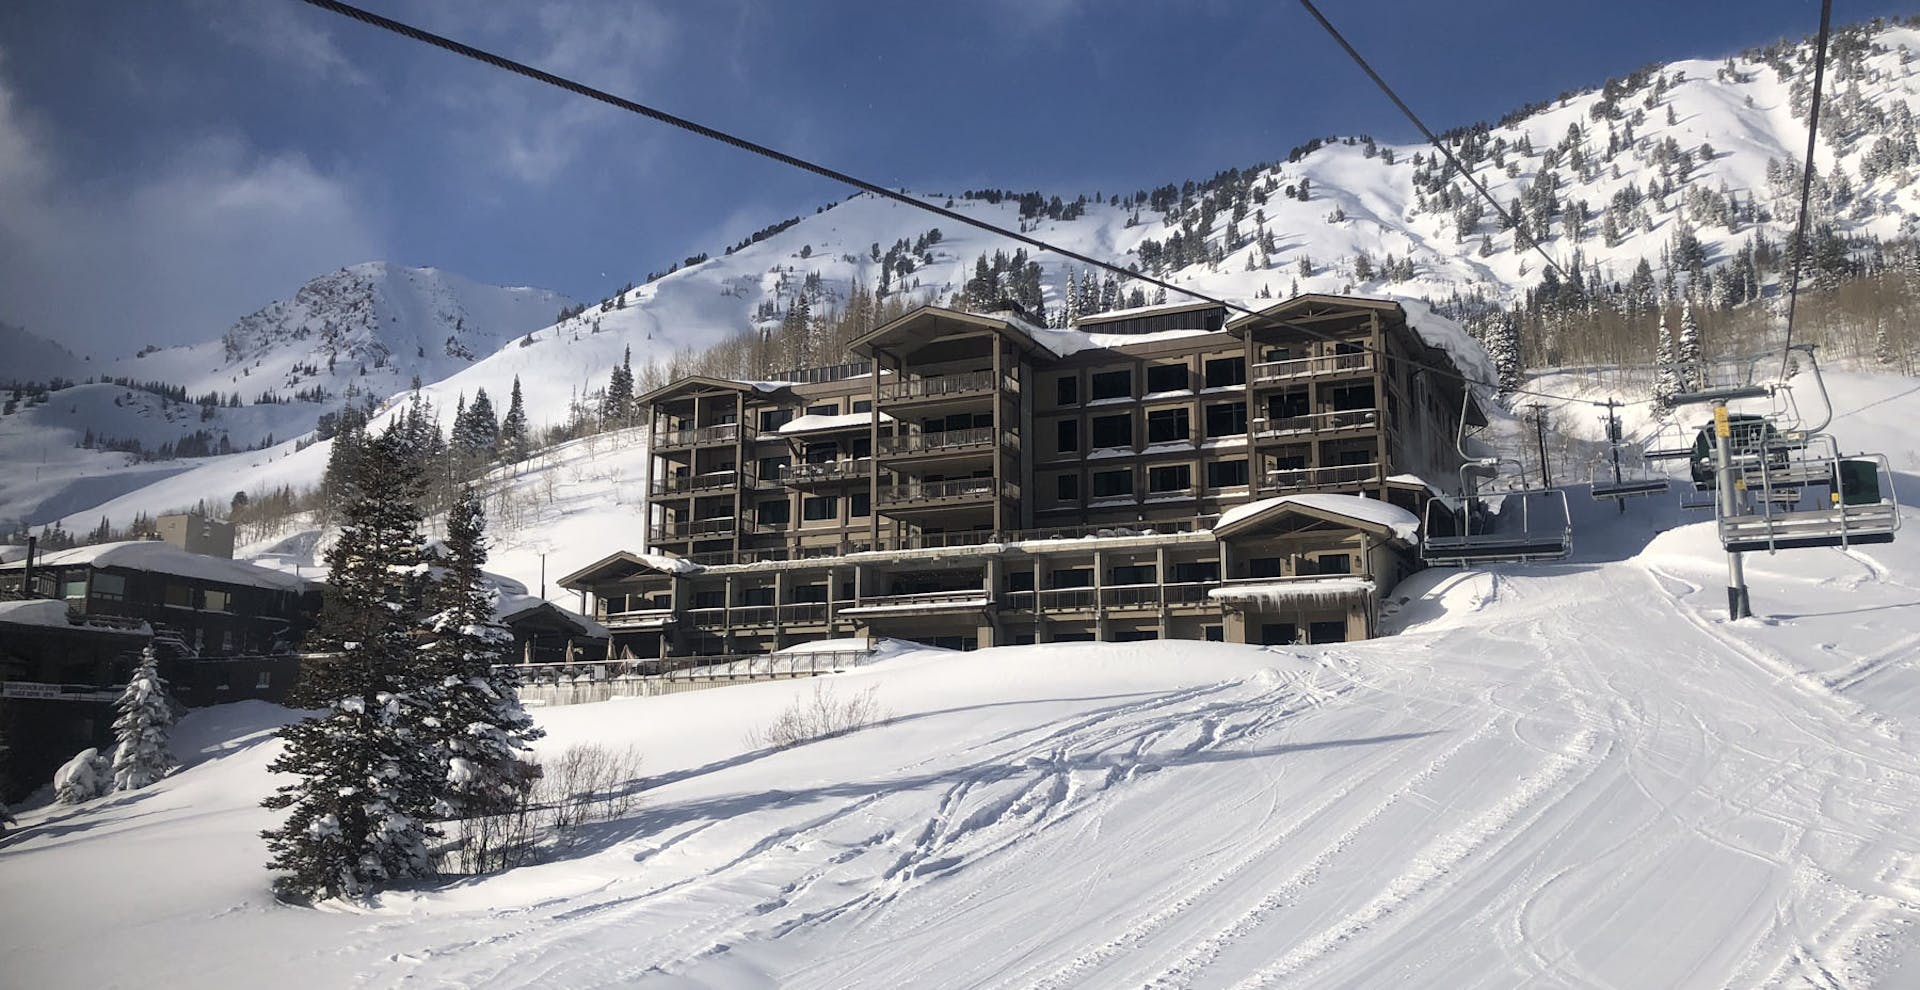 Alta ski resort lodging